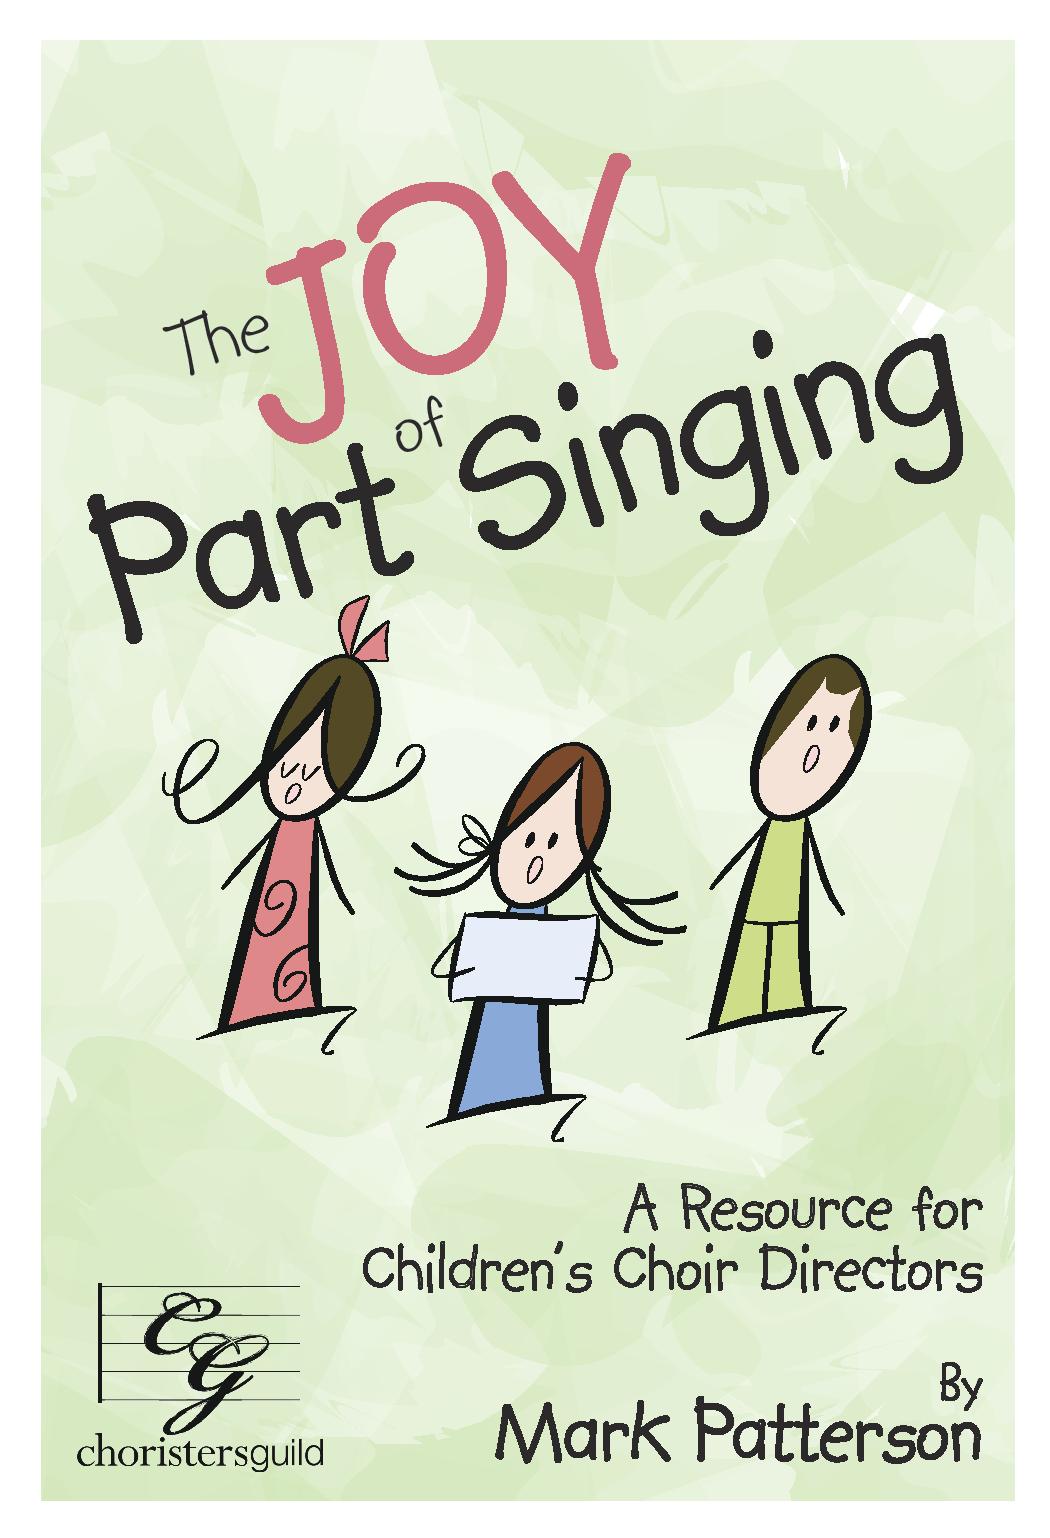 The Joy of Part Singing